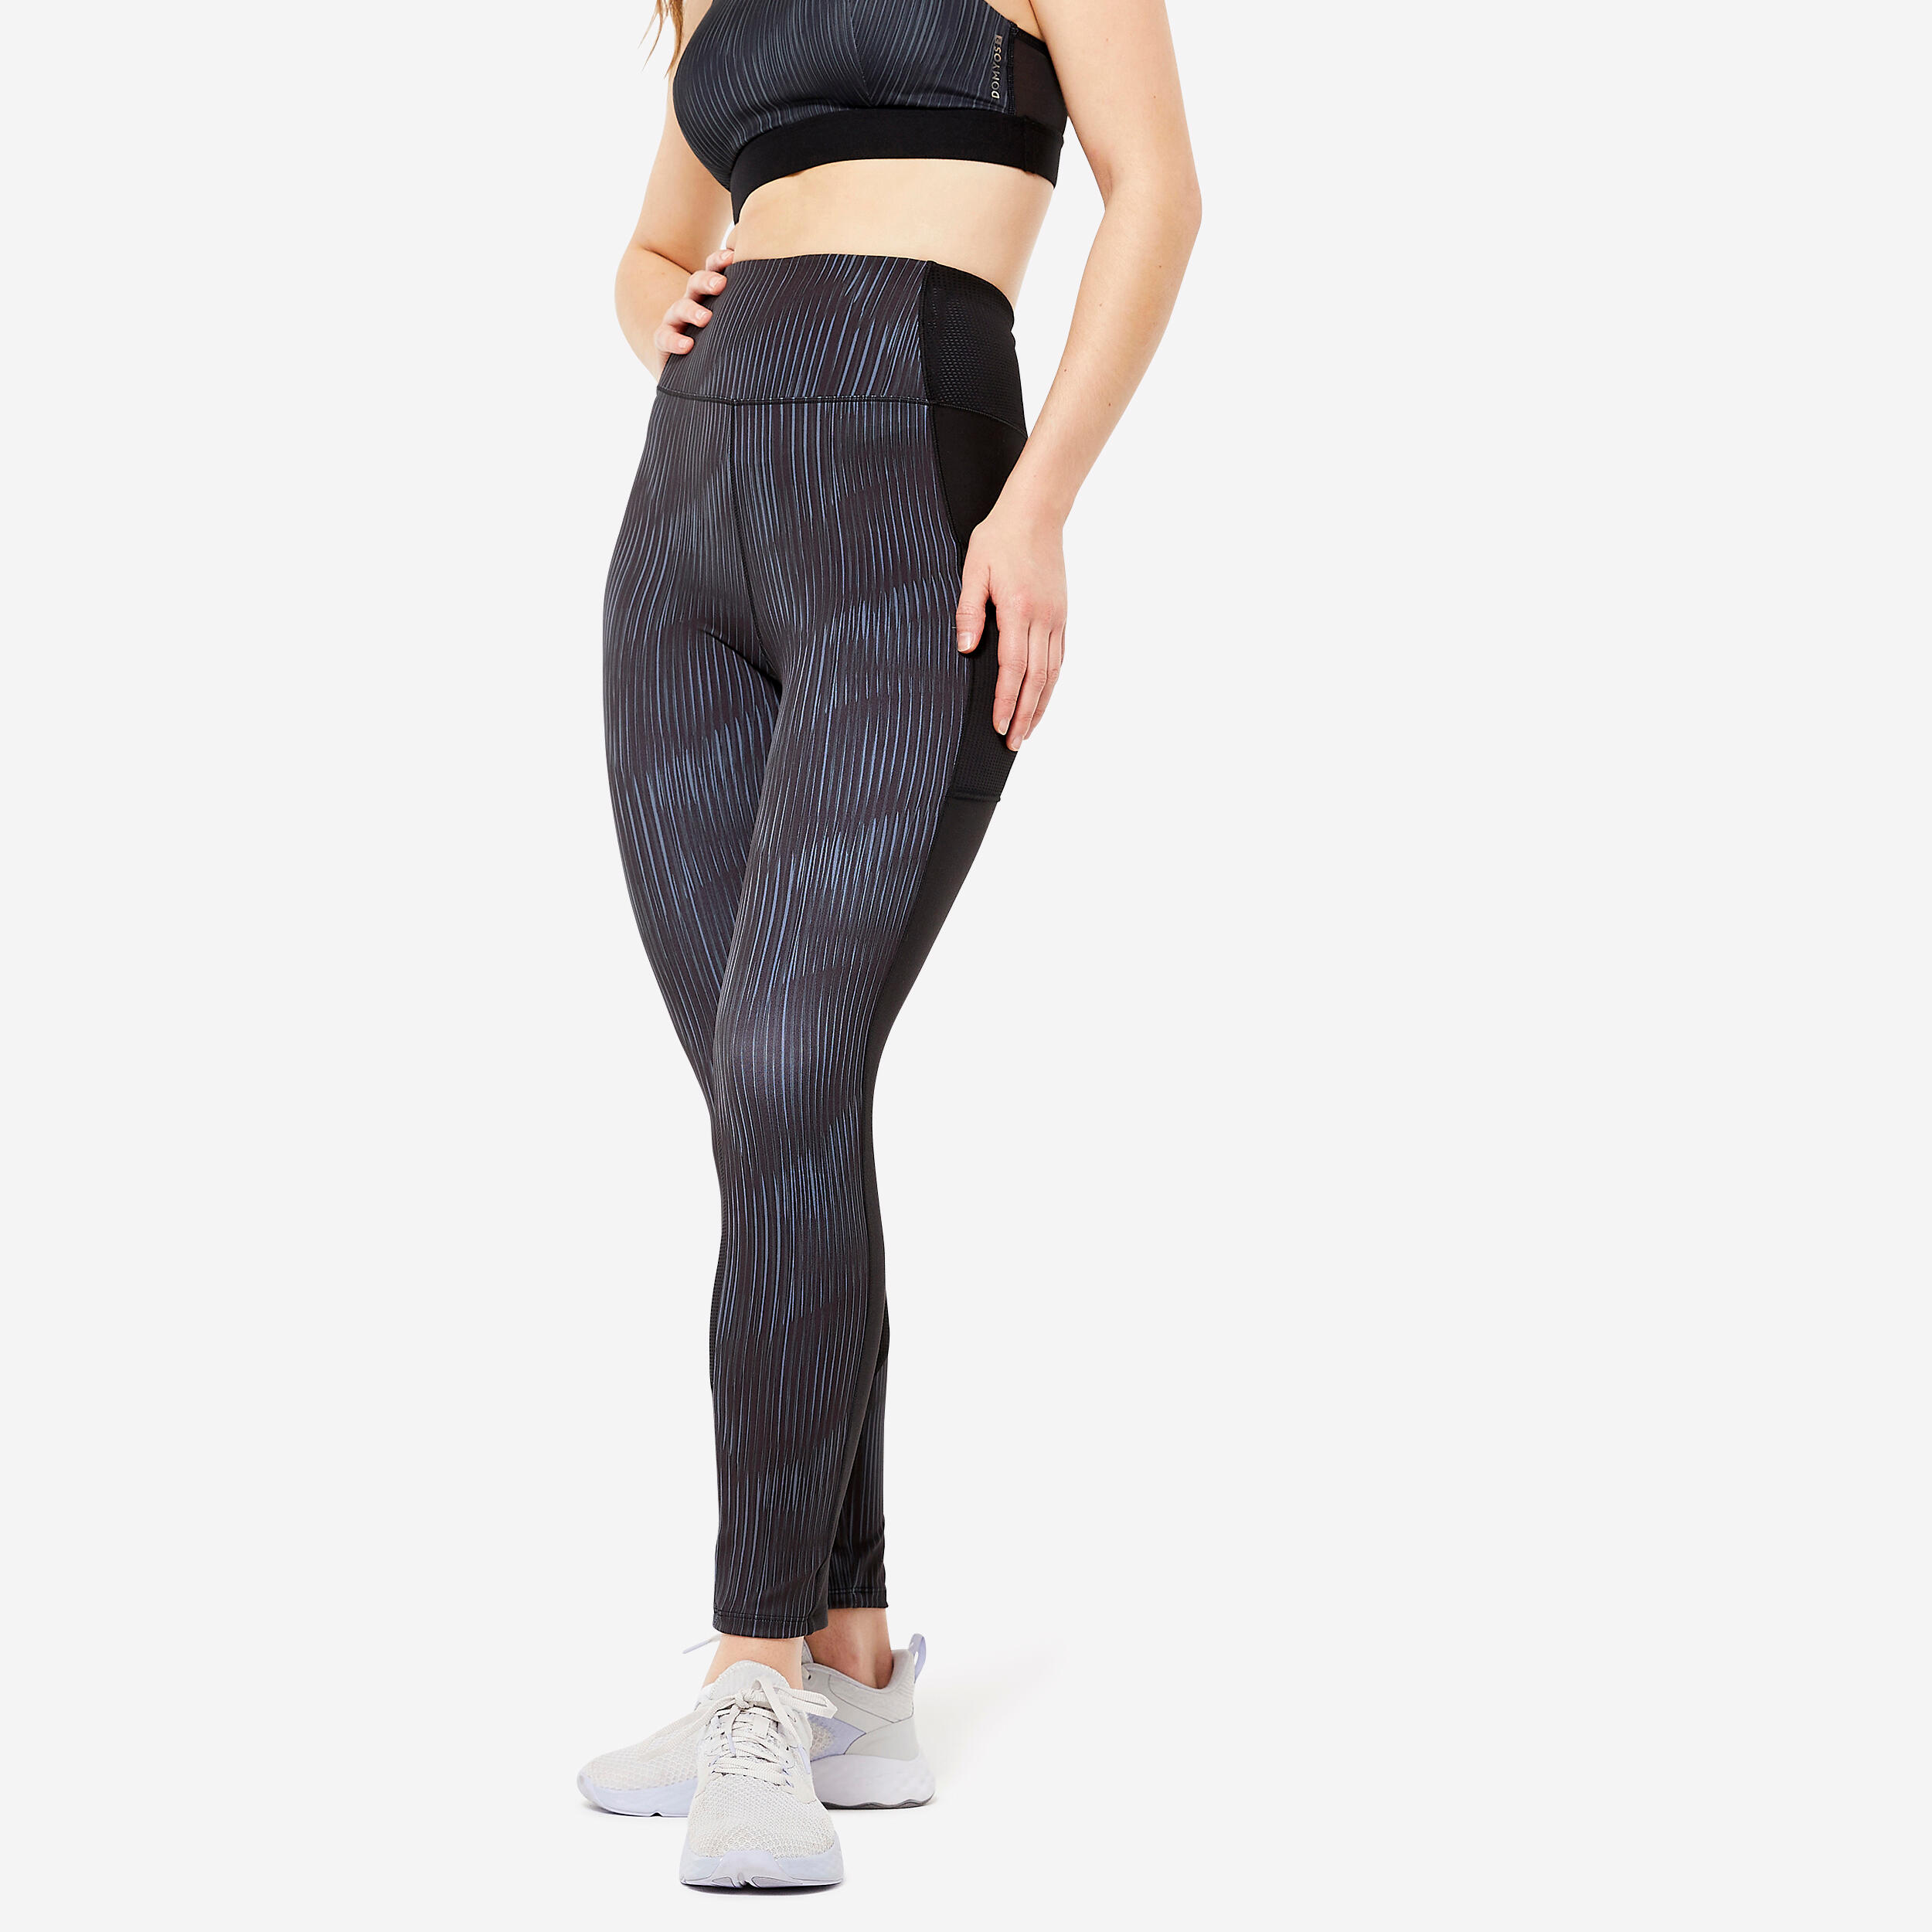 Women's Fitness Cardio Leggings with Phone Pocket - Black/Grey Print 1/7